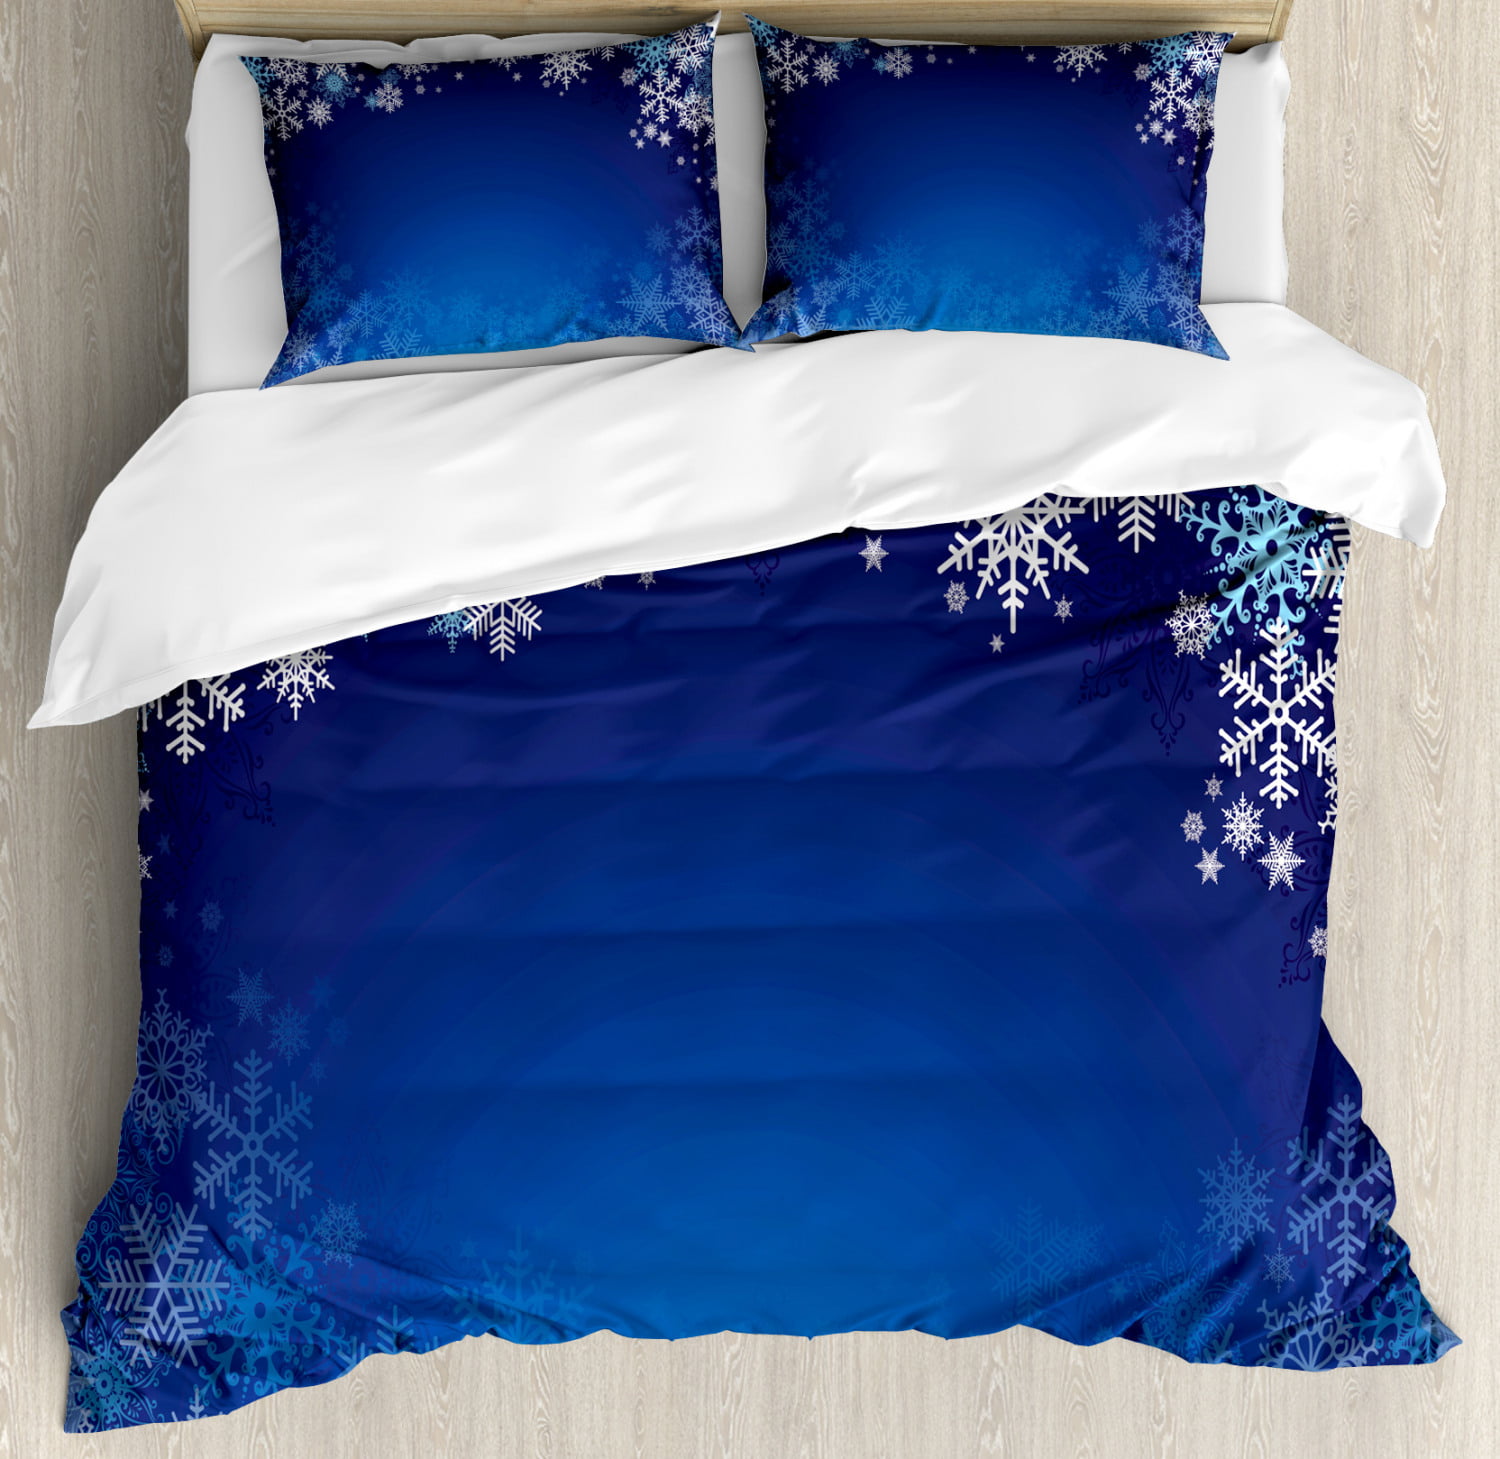 Piece Bedding Set With 2 Pillow Shams, Blue Snowflake Duvet Cover